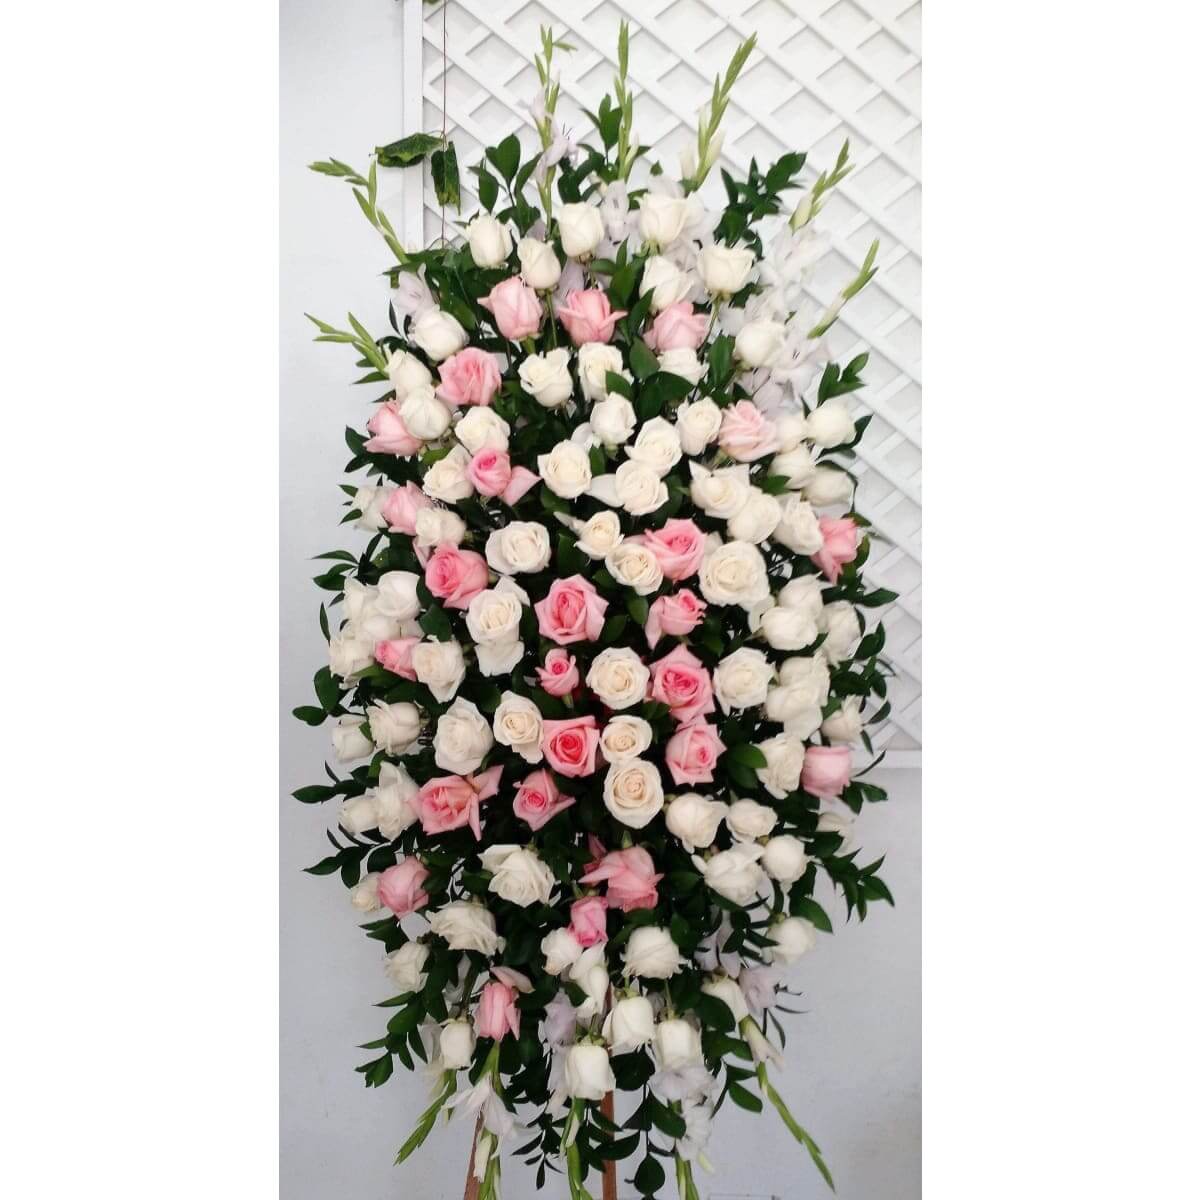 Forever B - Fúnebre - Rosas Blancas y Rosadas - Floristería Zabrisky